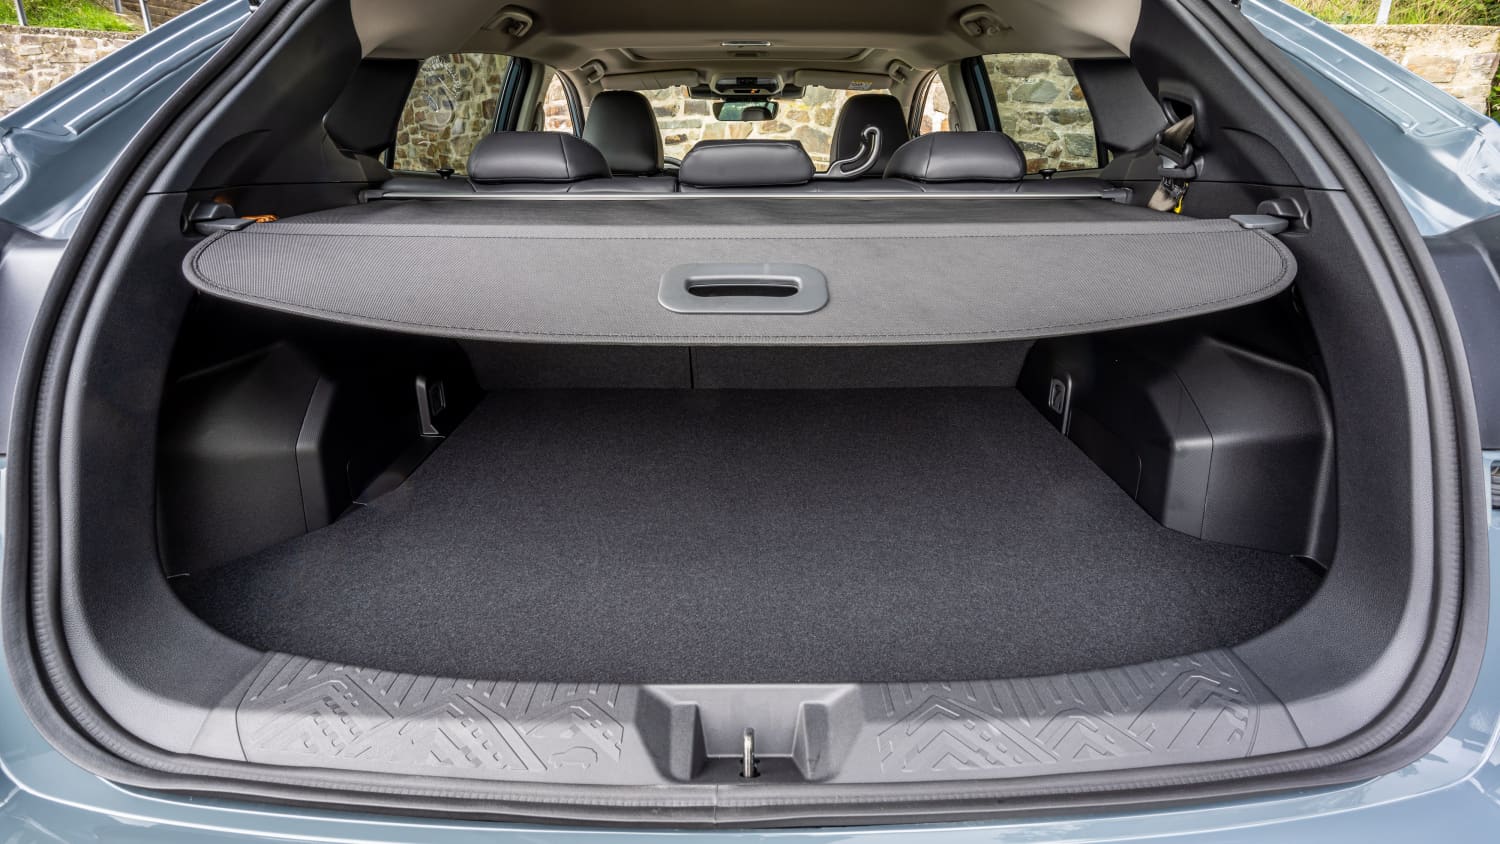 Auto-kofferraum Gepäcknetz für Subaru Outback Forester XV Vermächtnis  Impreza Tribeca BRZ WRX SVX